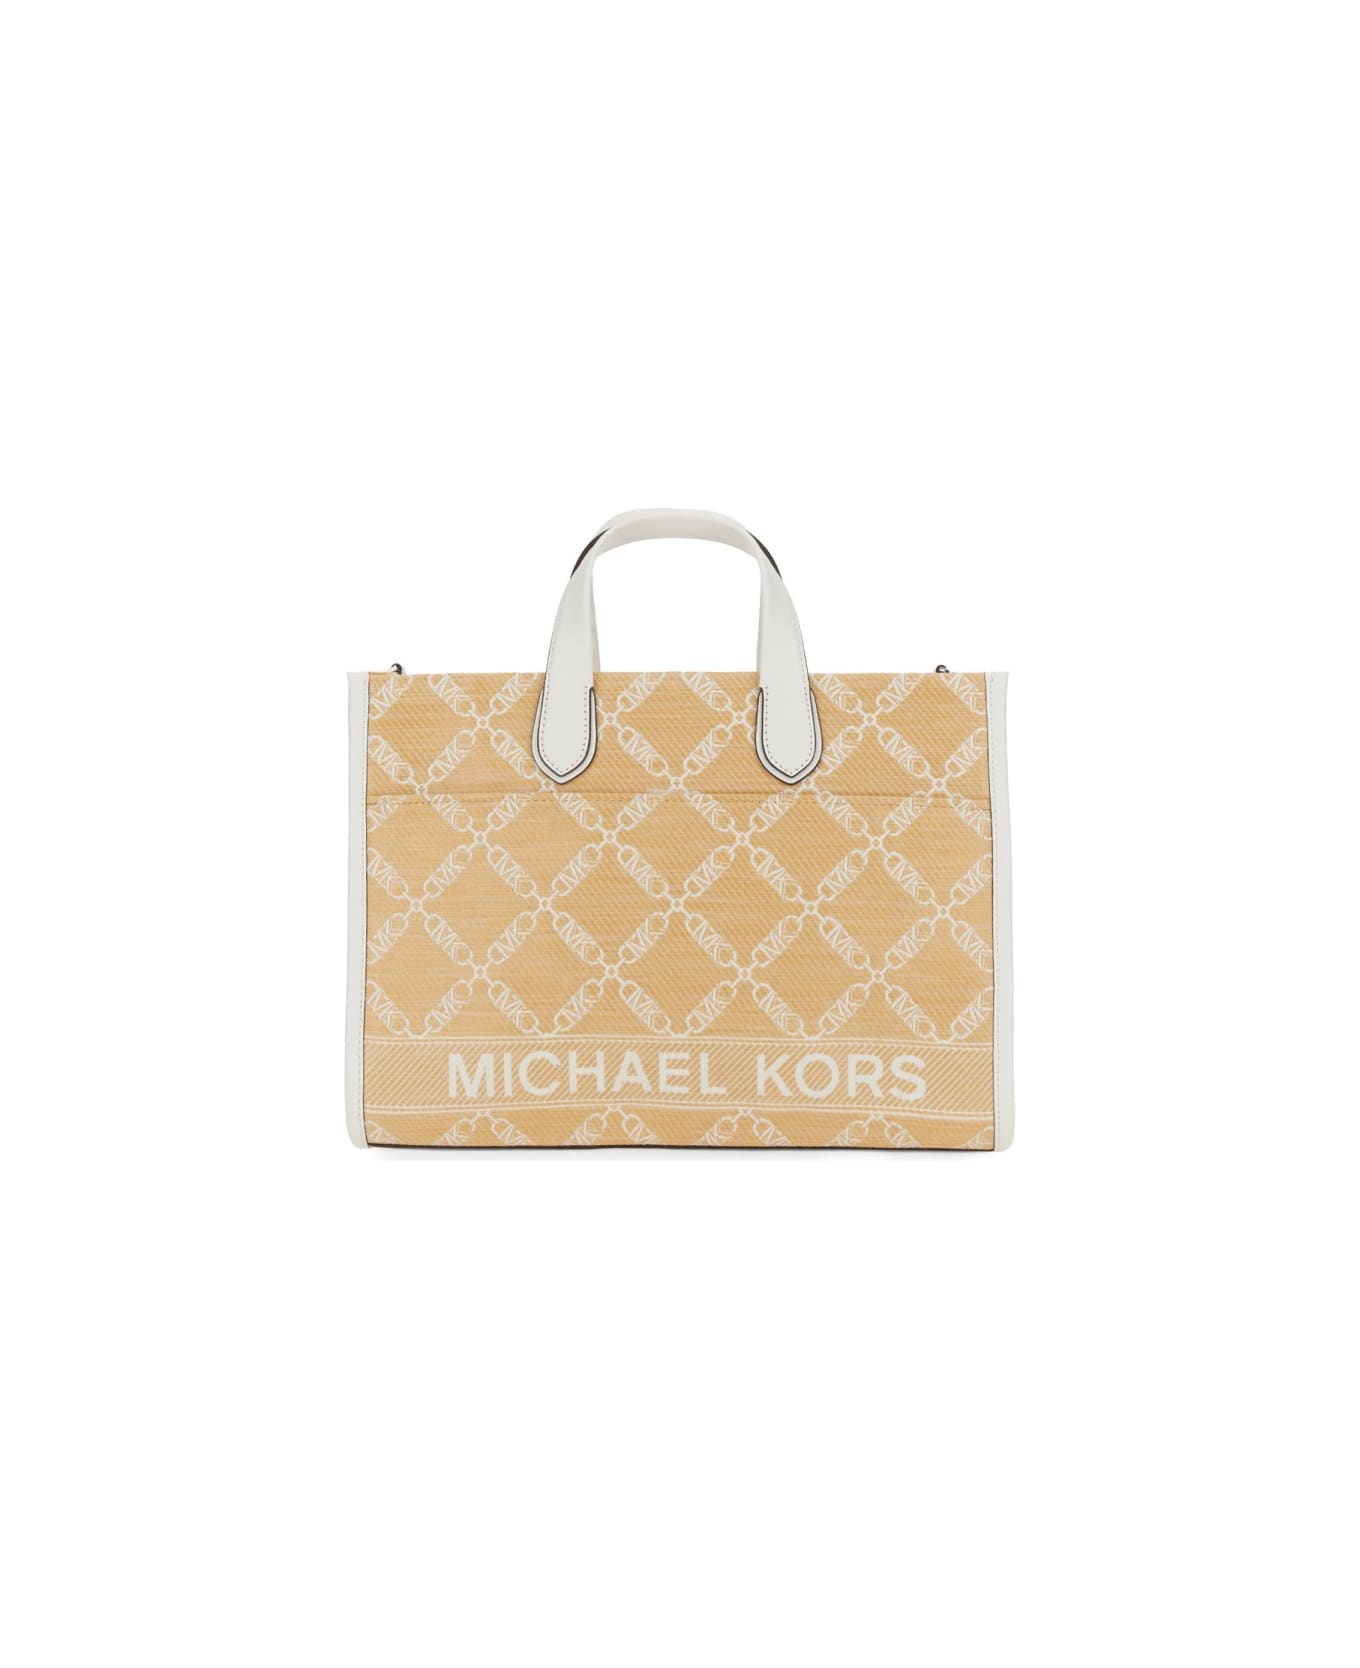 Michael Kors Gigi Large Tote Bag - BEIGE